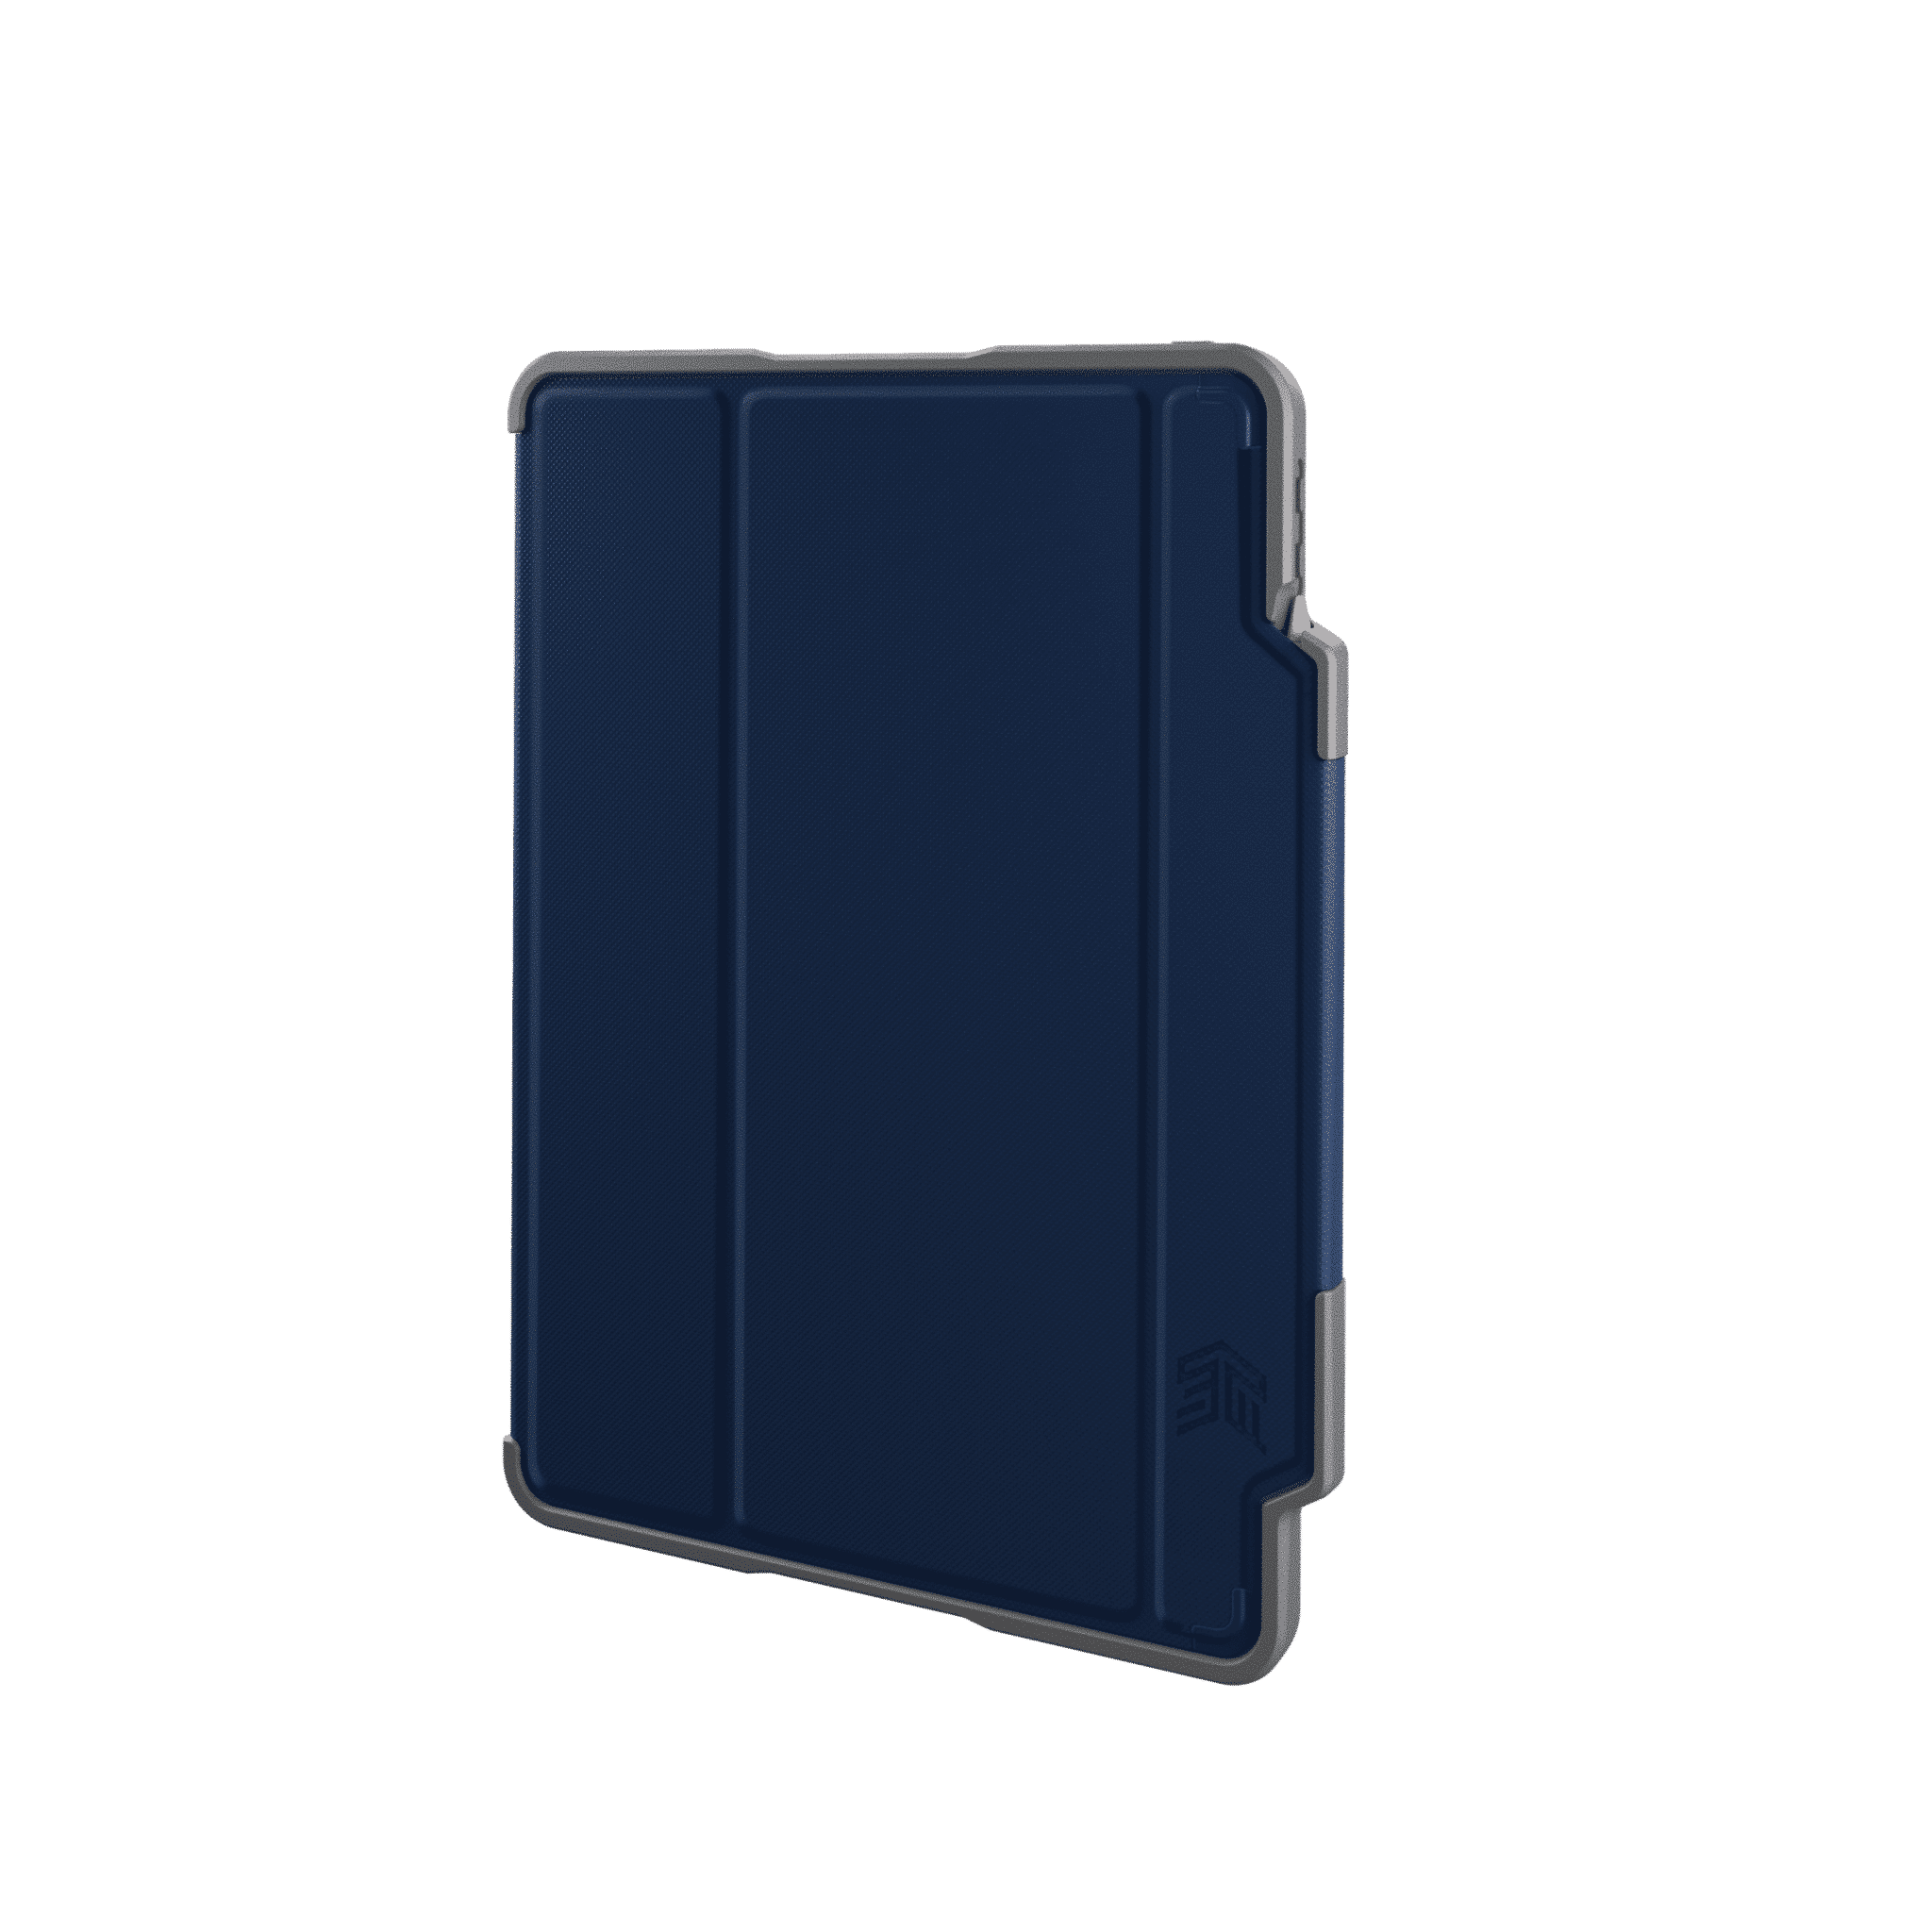 STM รุ่น Dux Plus - เคส iPad Air 10.9" (4th/5th Gen) - น้ำเงิน